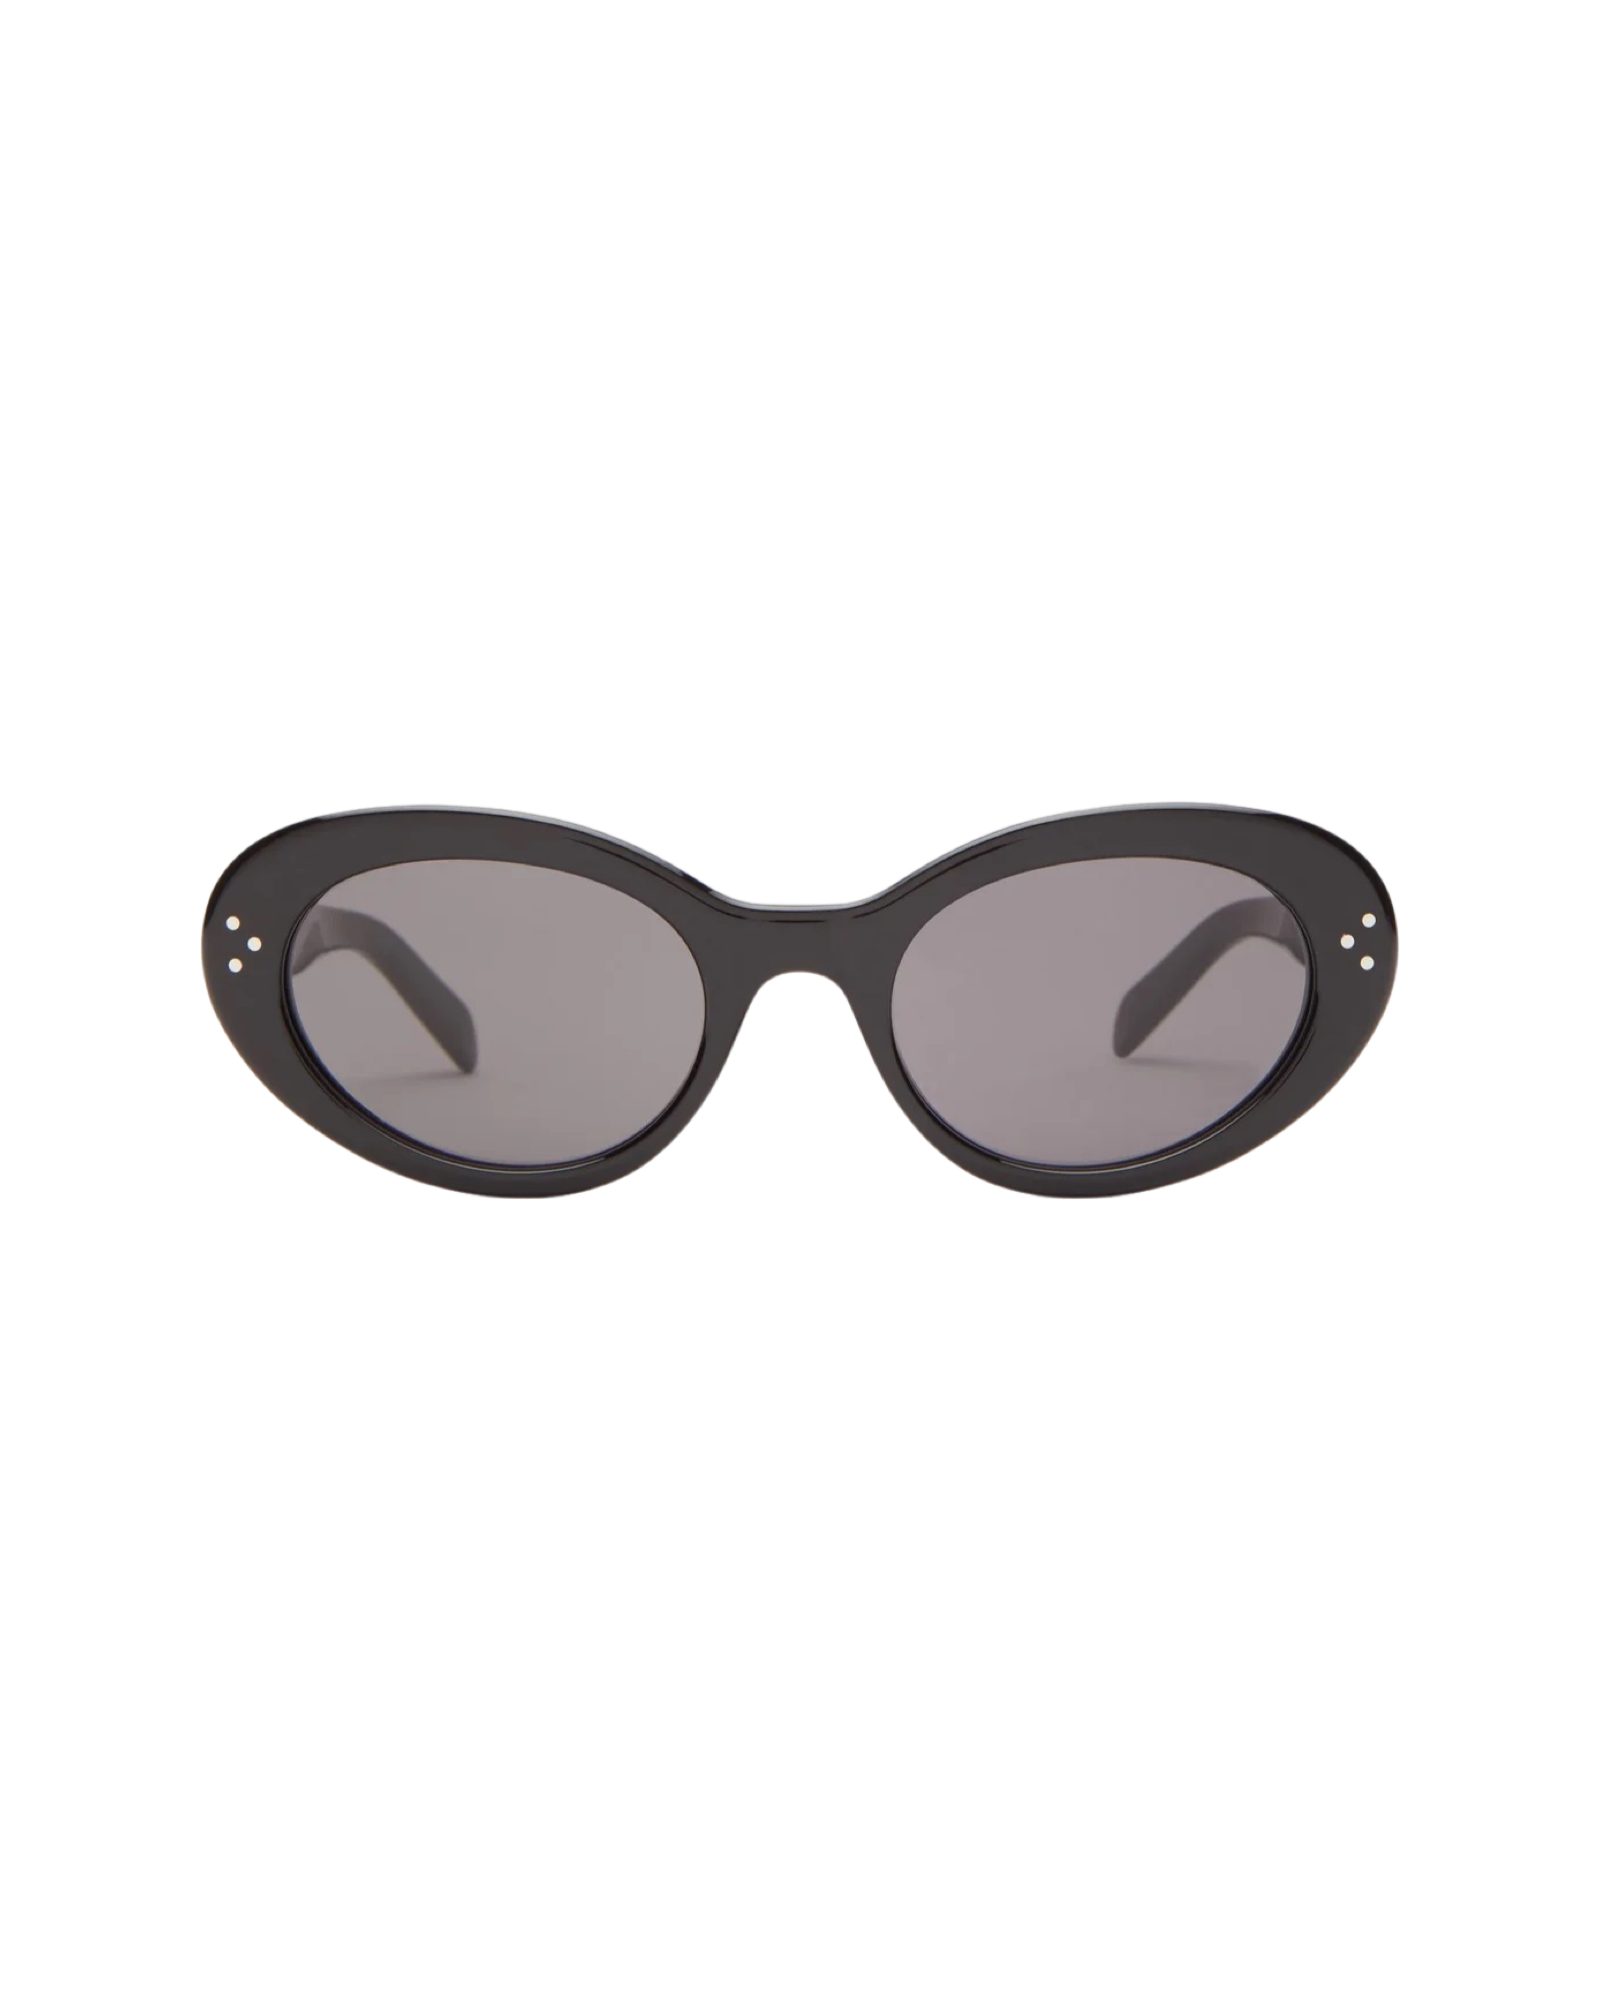 Oval cat-eye acetate sunglasses